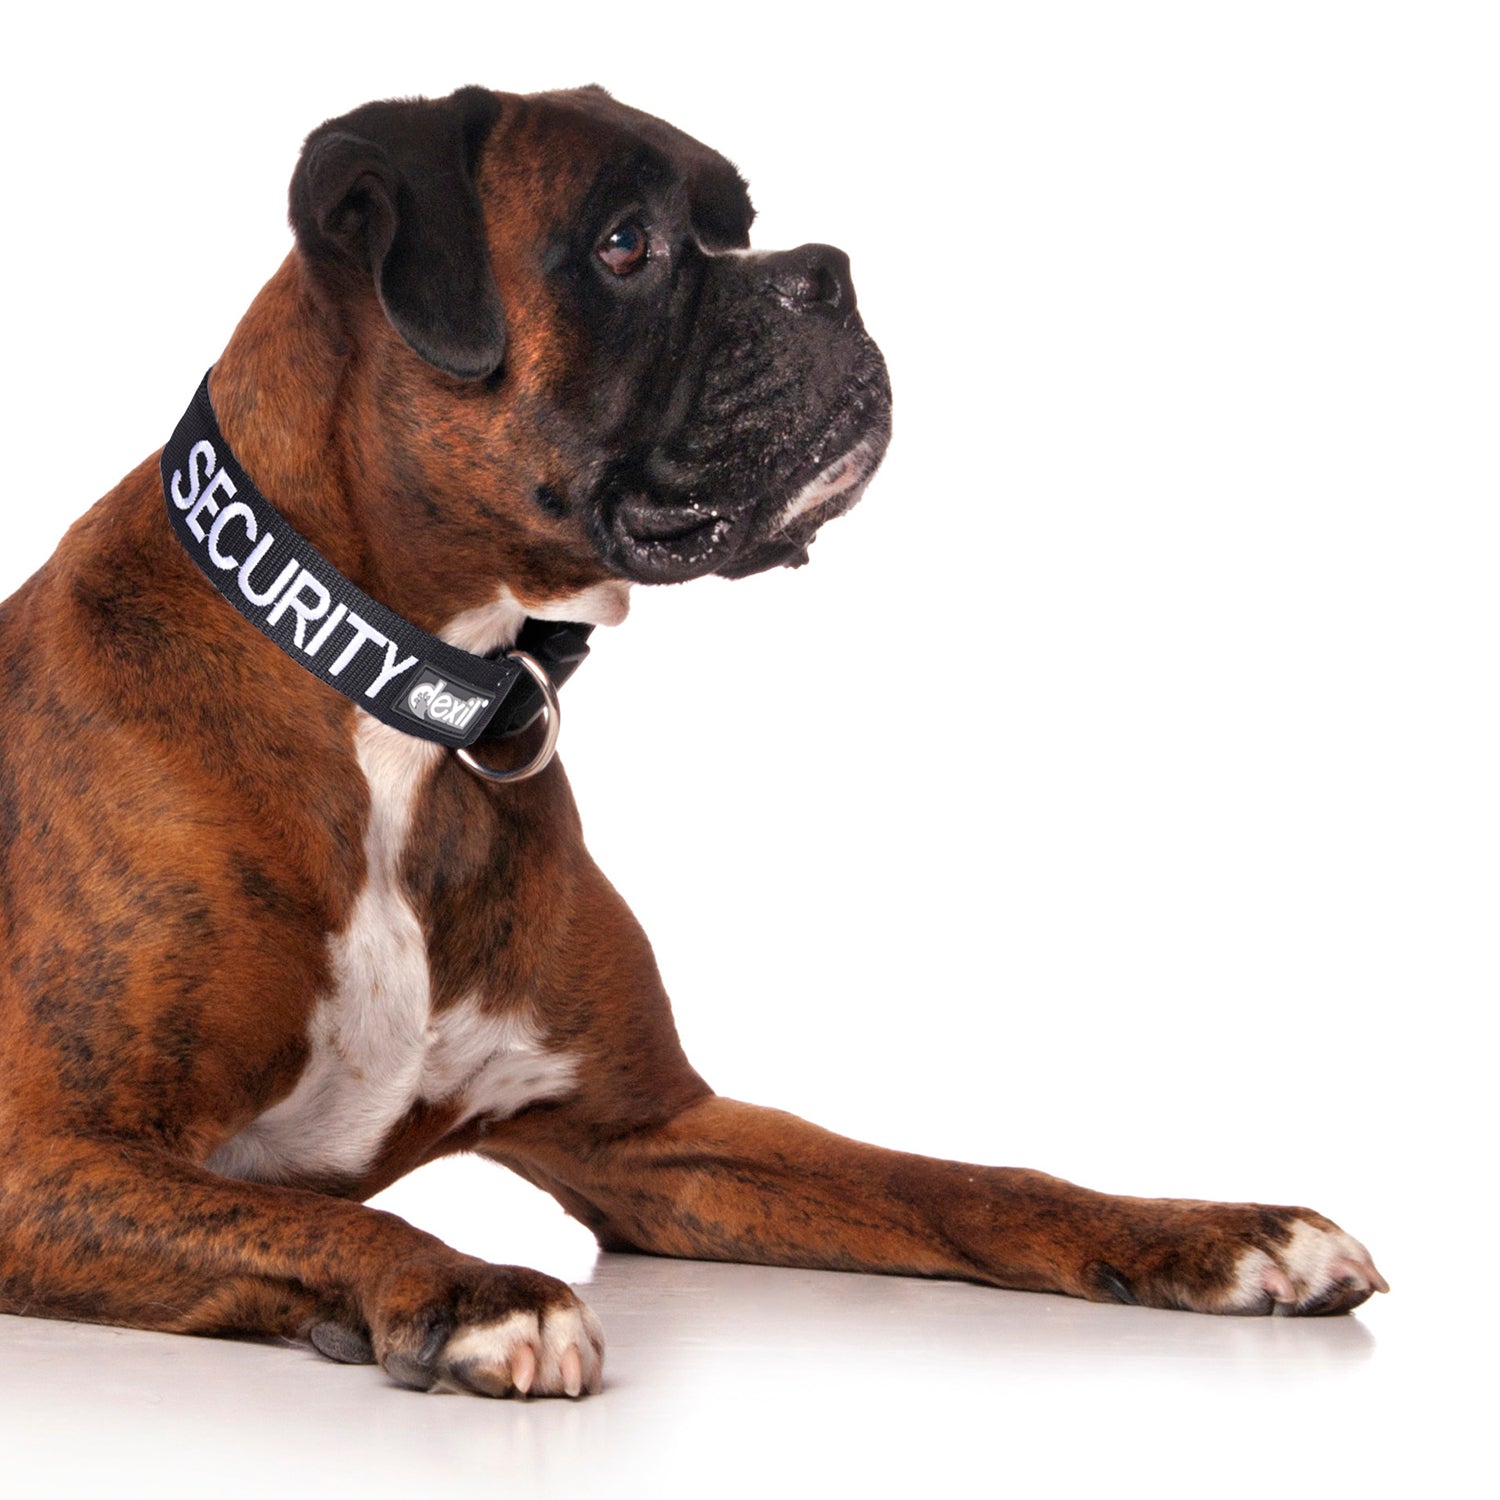 Security Dog collars